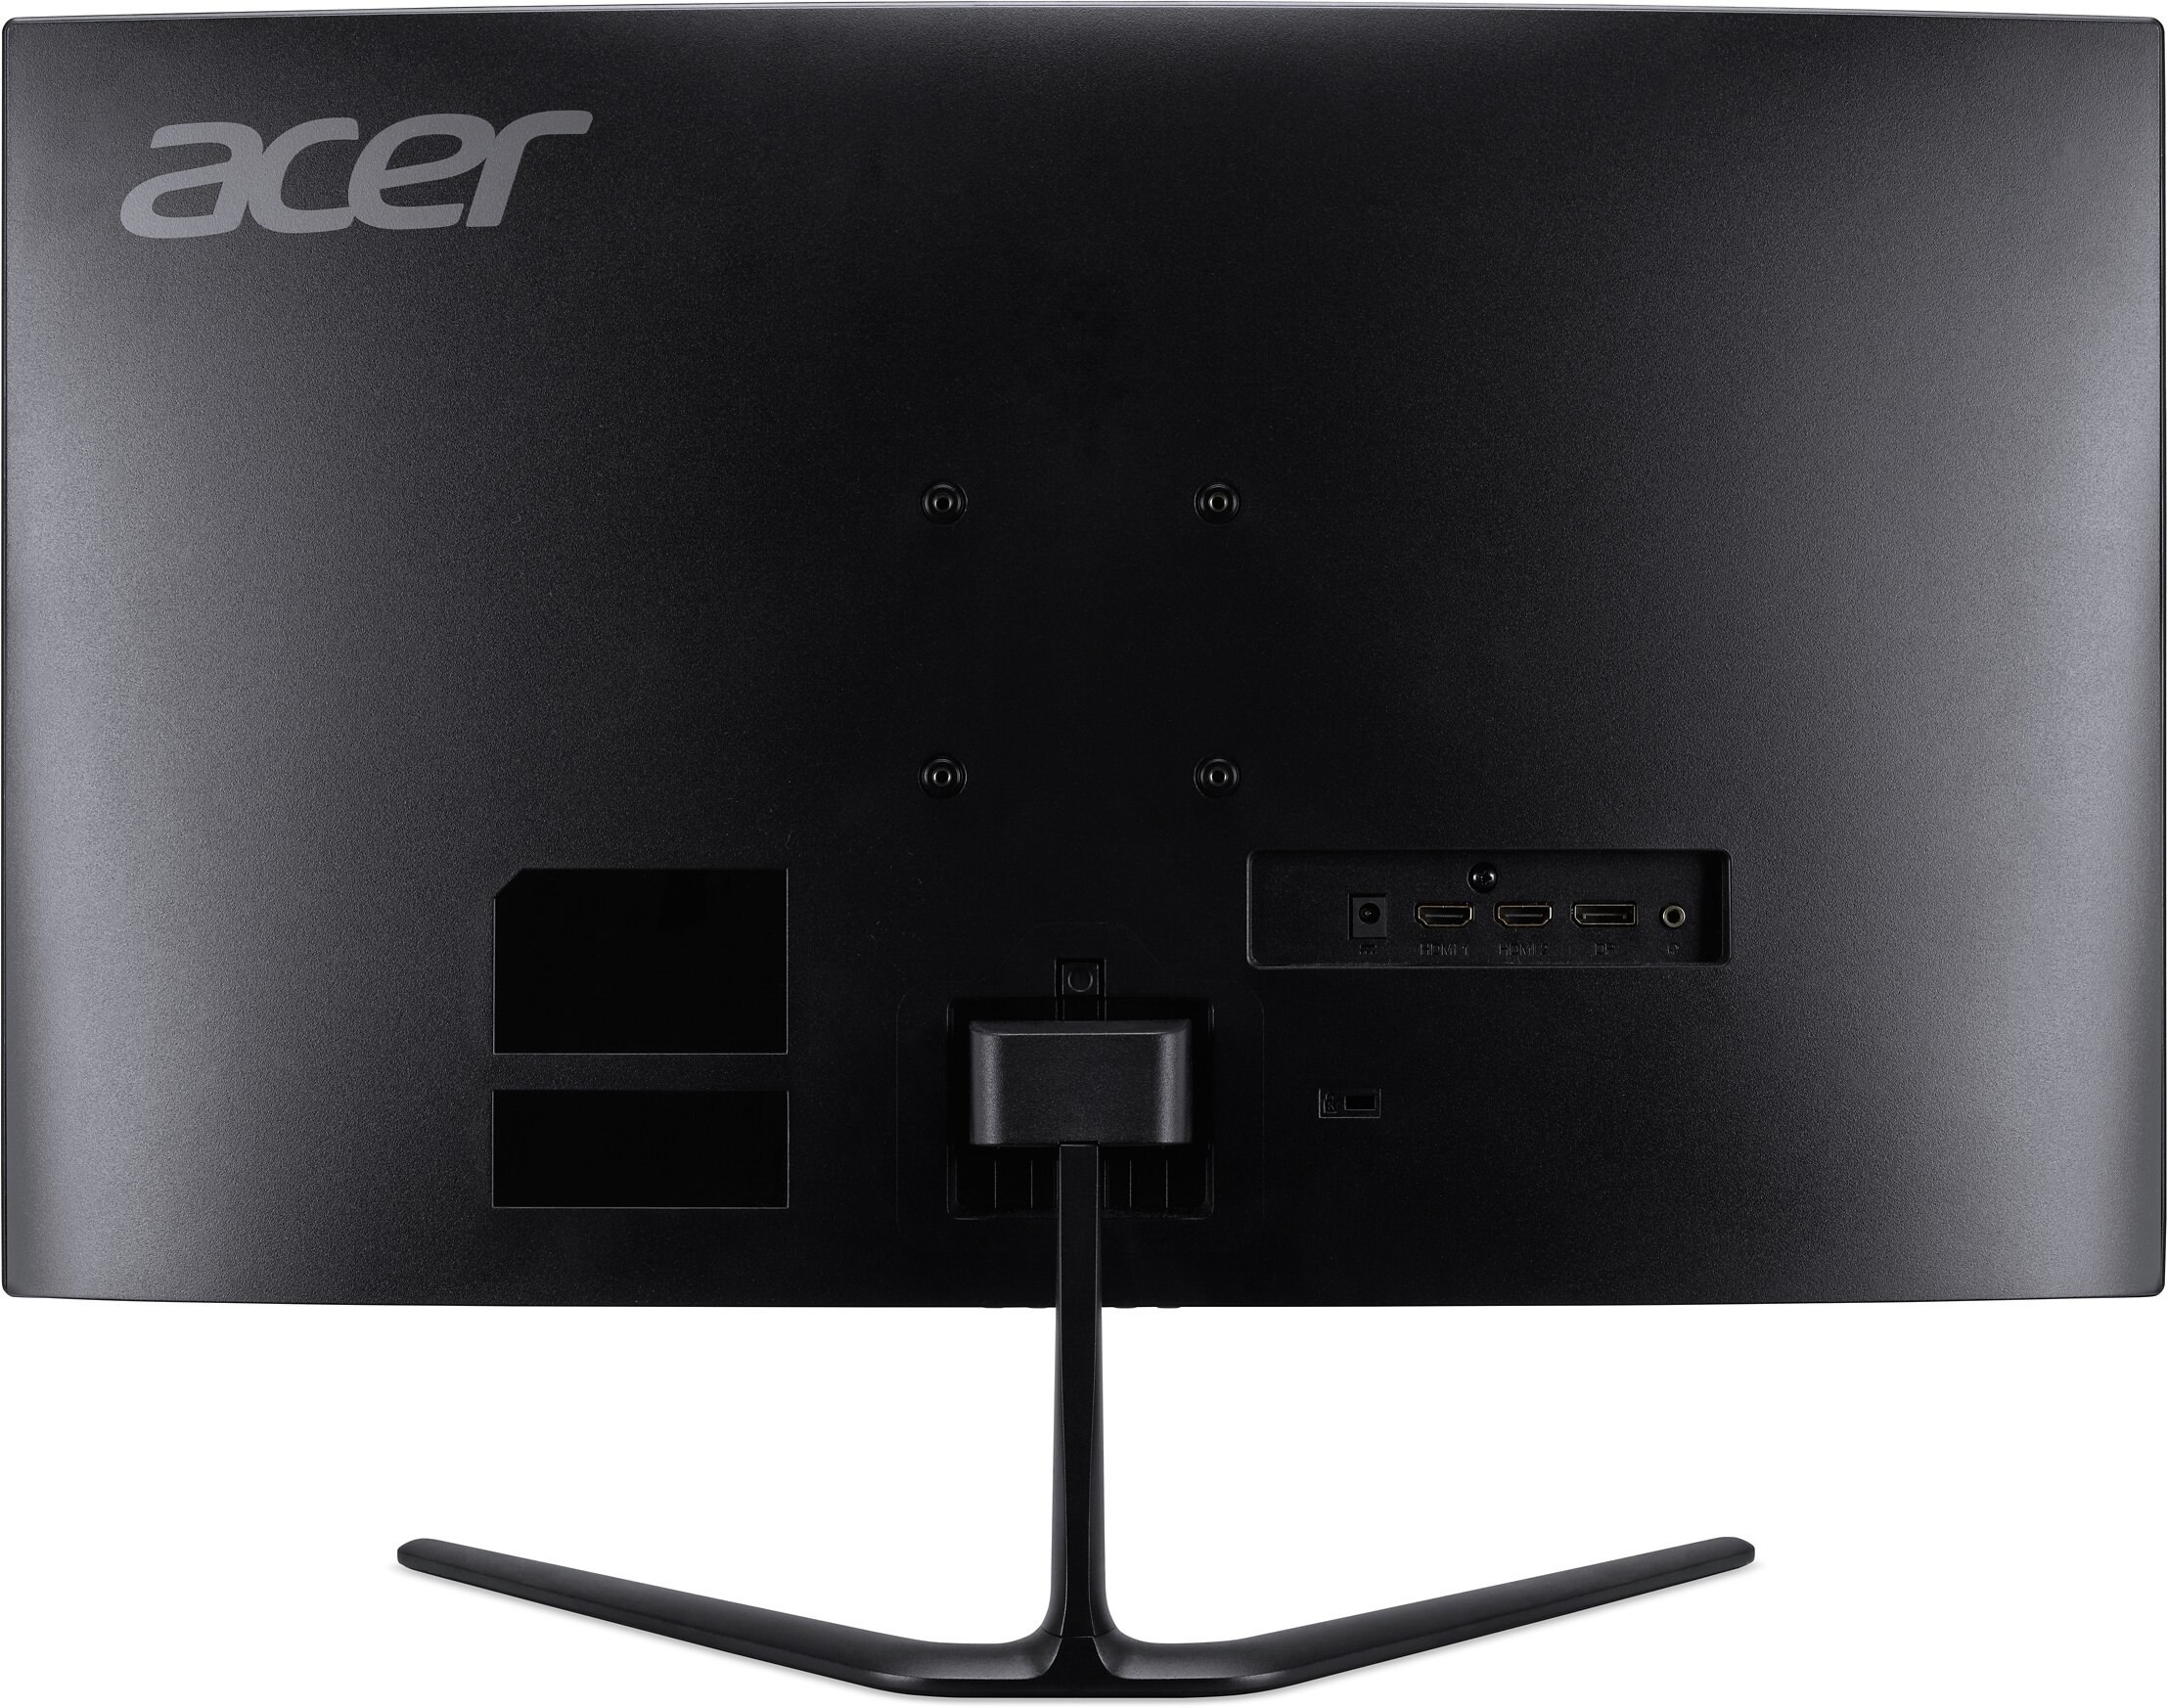 Curved Monitor 27 Inch Acer Nitro ED270U_P2, Curved 2K 170Hz